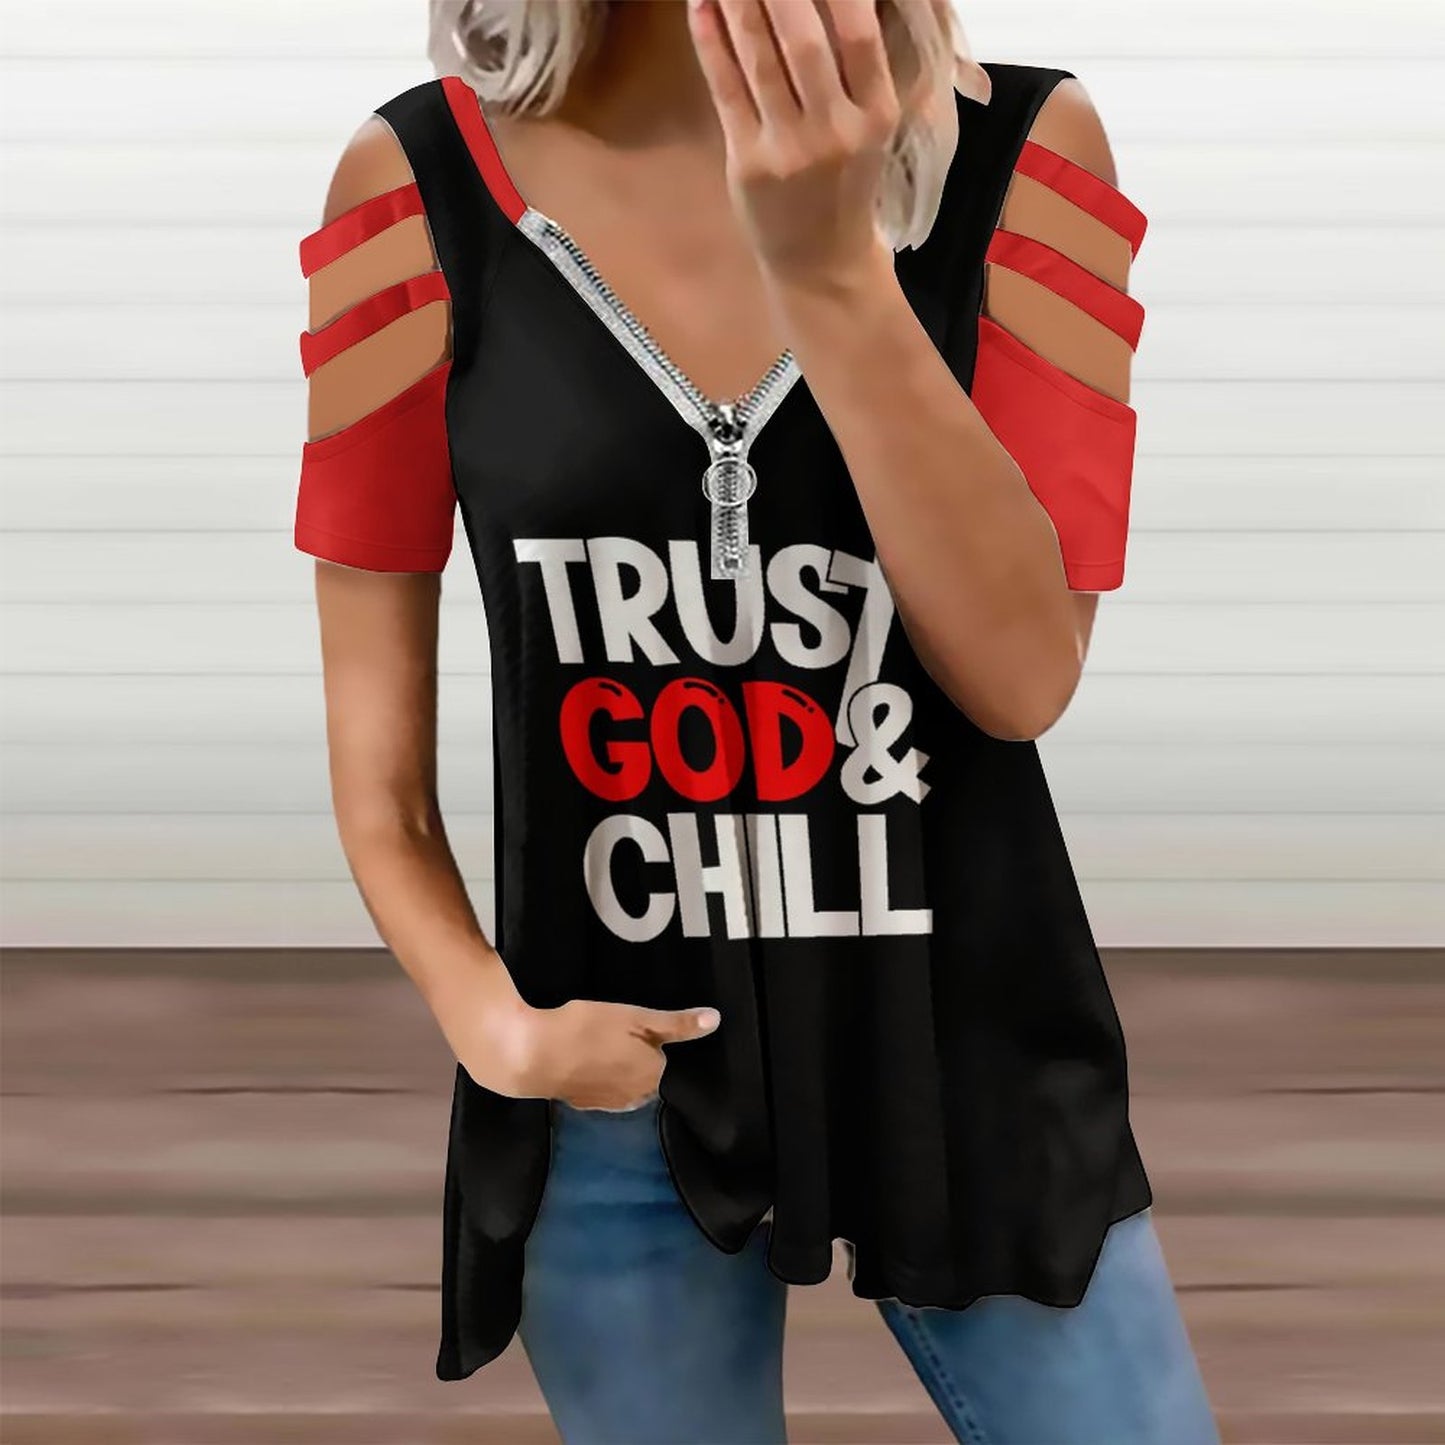 Trust God & Chill Women's Christian T-shirt SALE-Personal Design